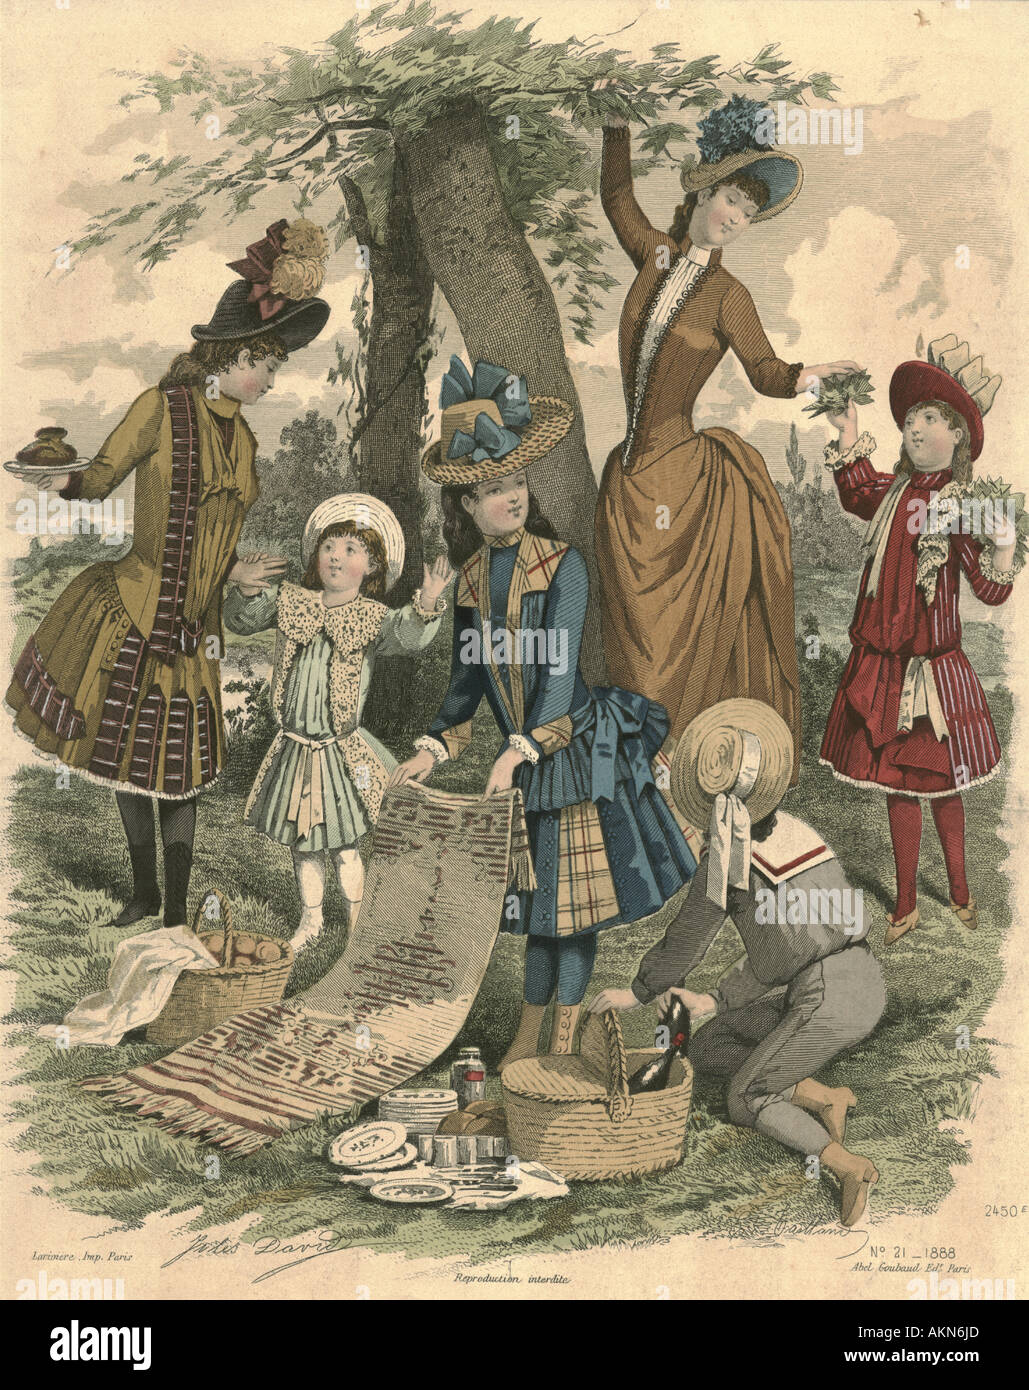 Fashion plate by Jules David 1888 showing picnic scene Stock Photo